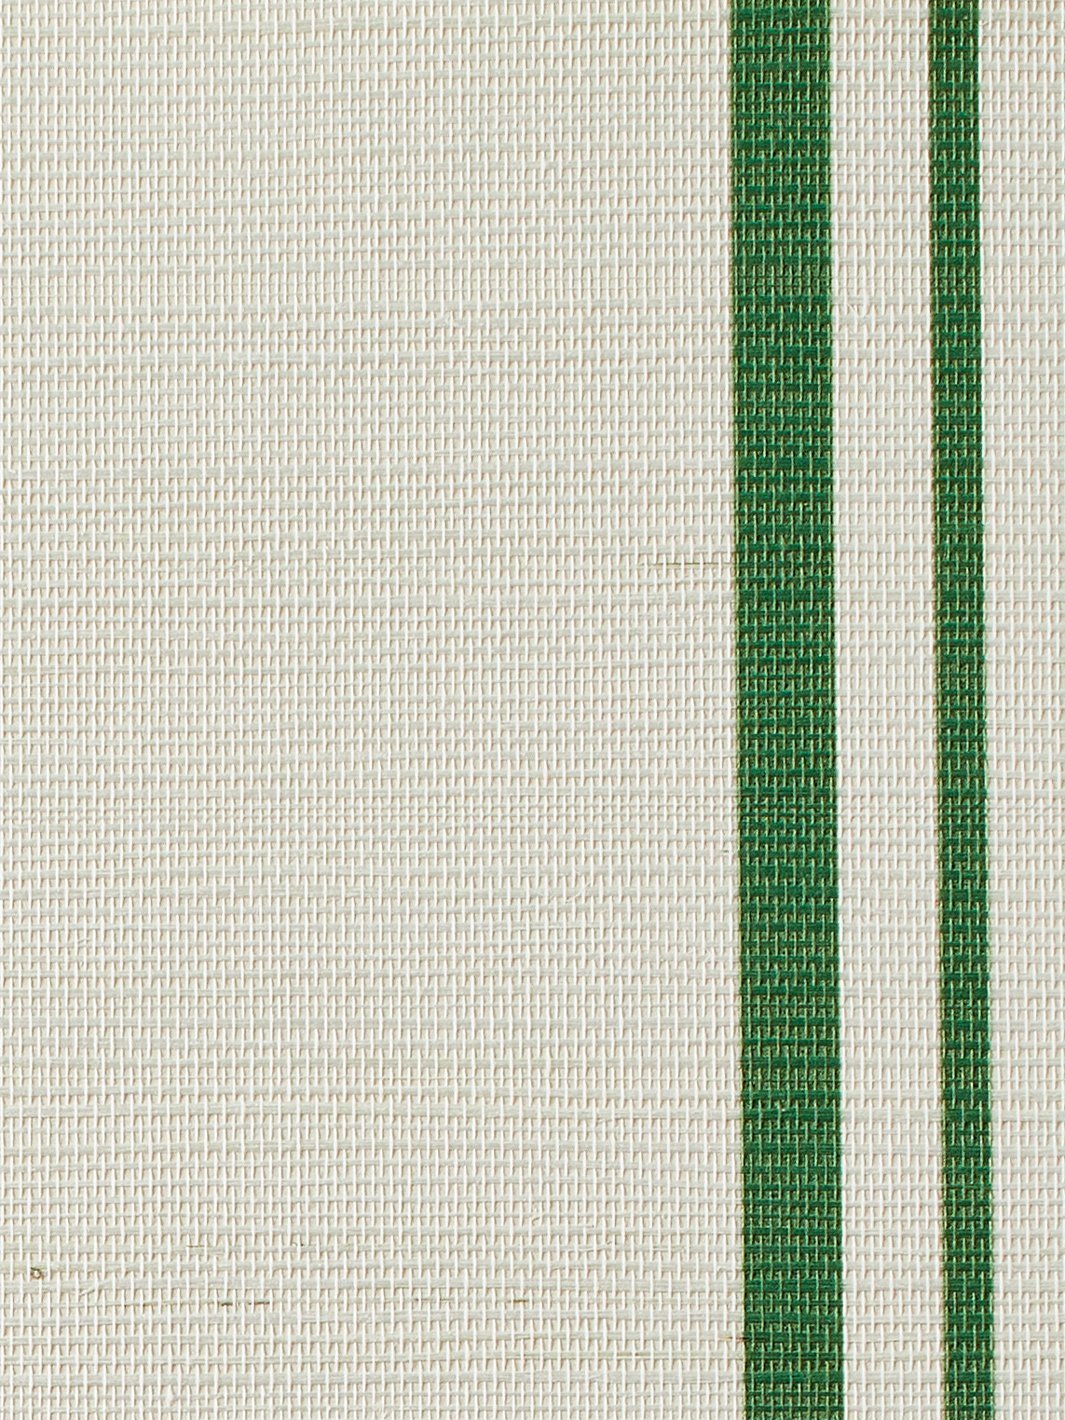 'Yorkshire Stripe' Grasscloth' Wallpaper by Wallshoppe - Green